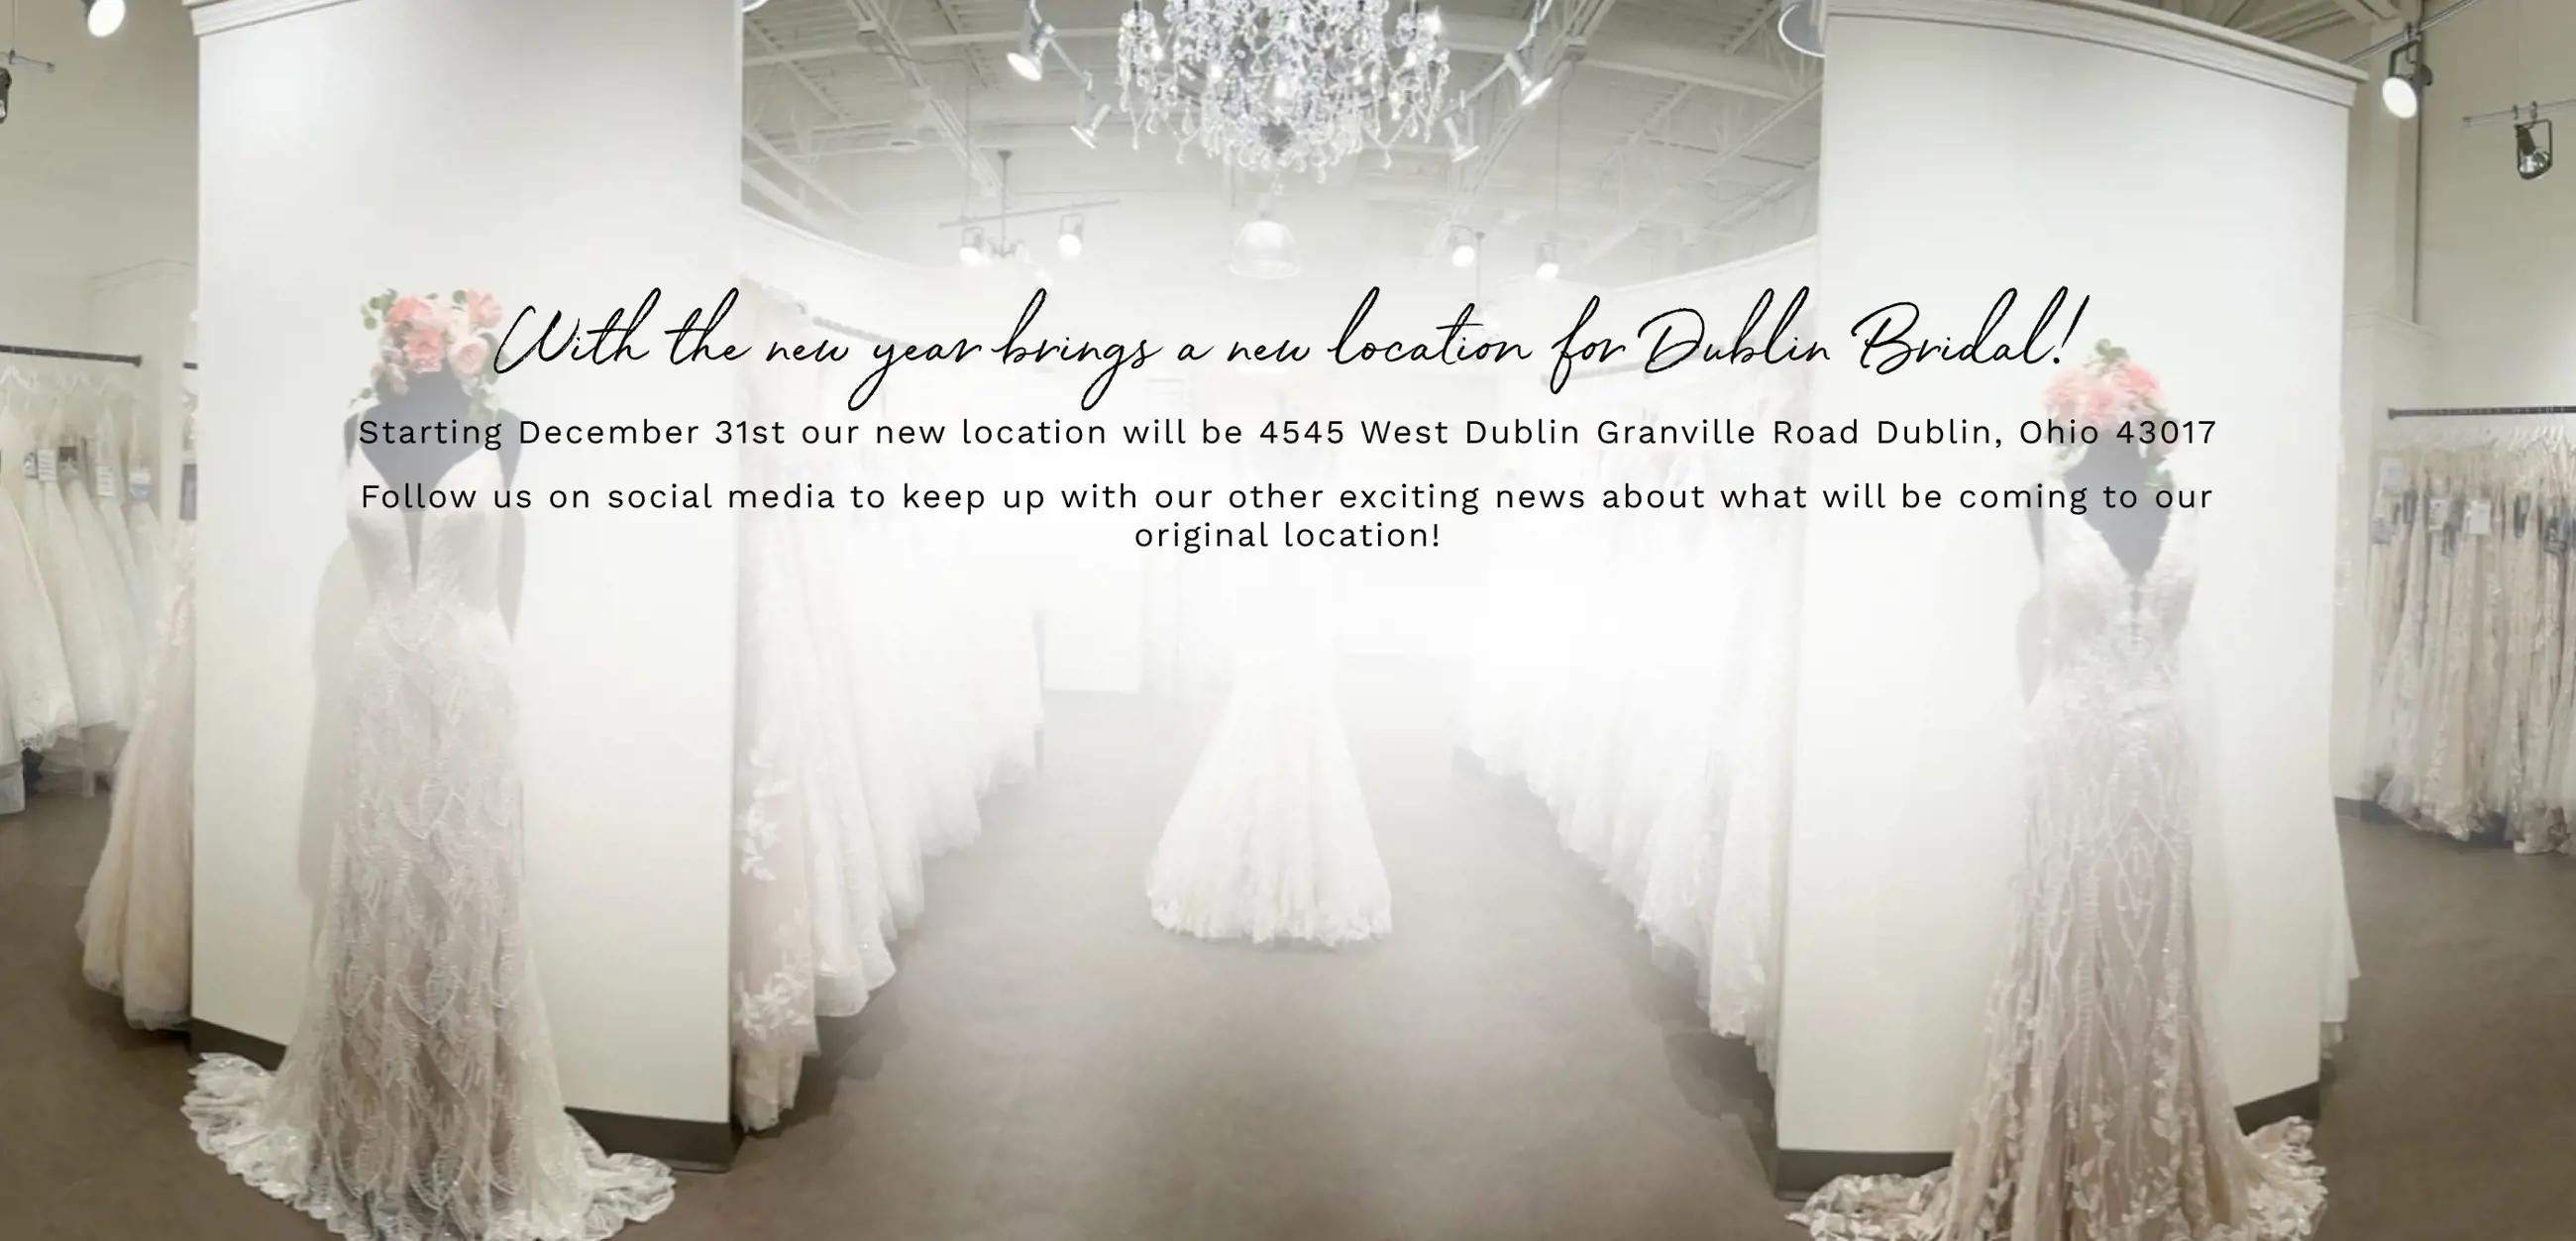 Dublin Bridal new location